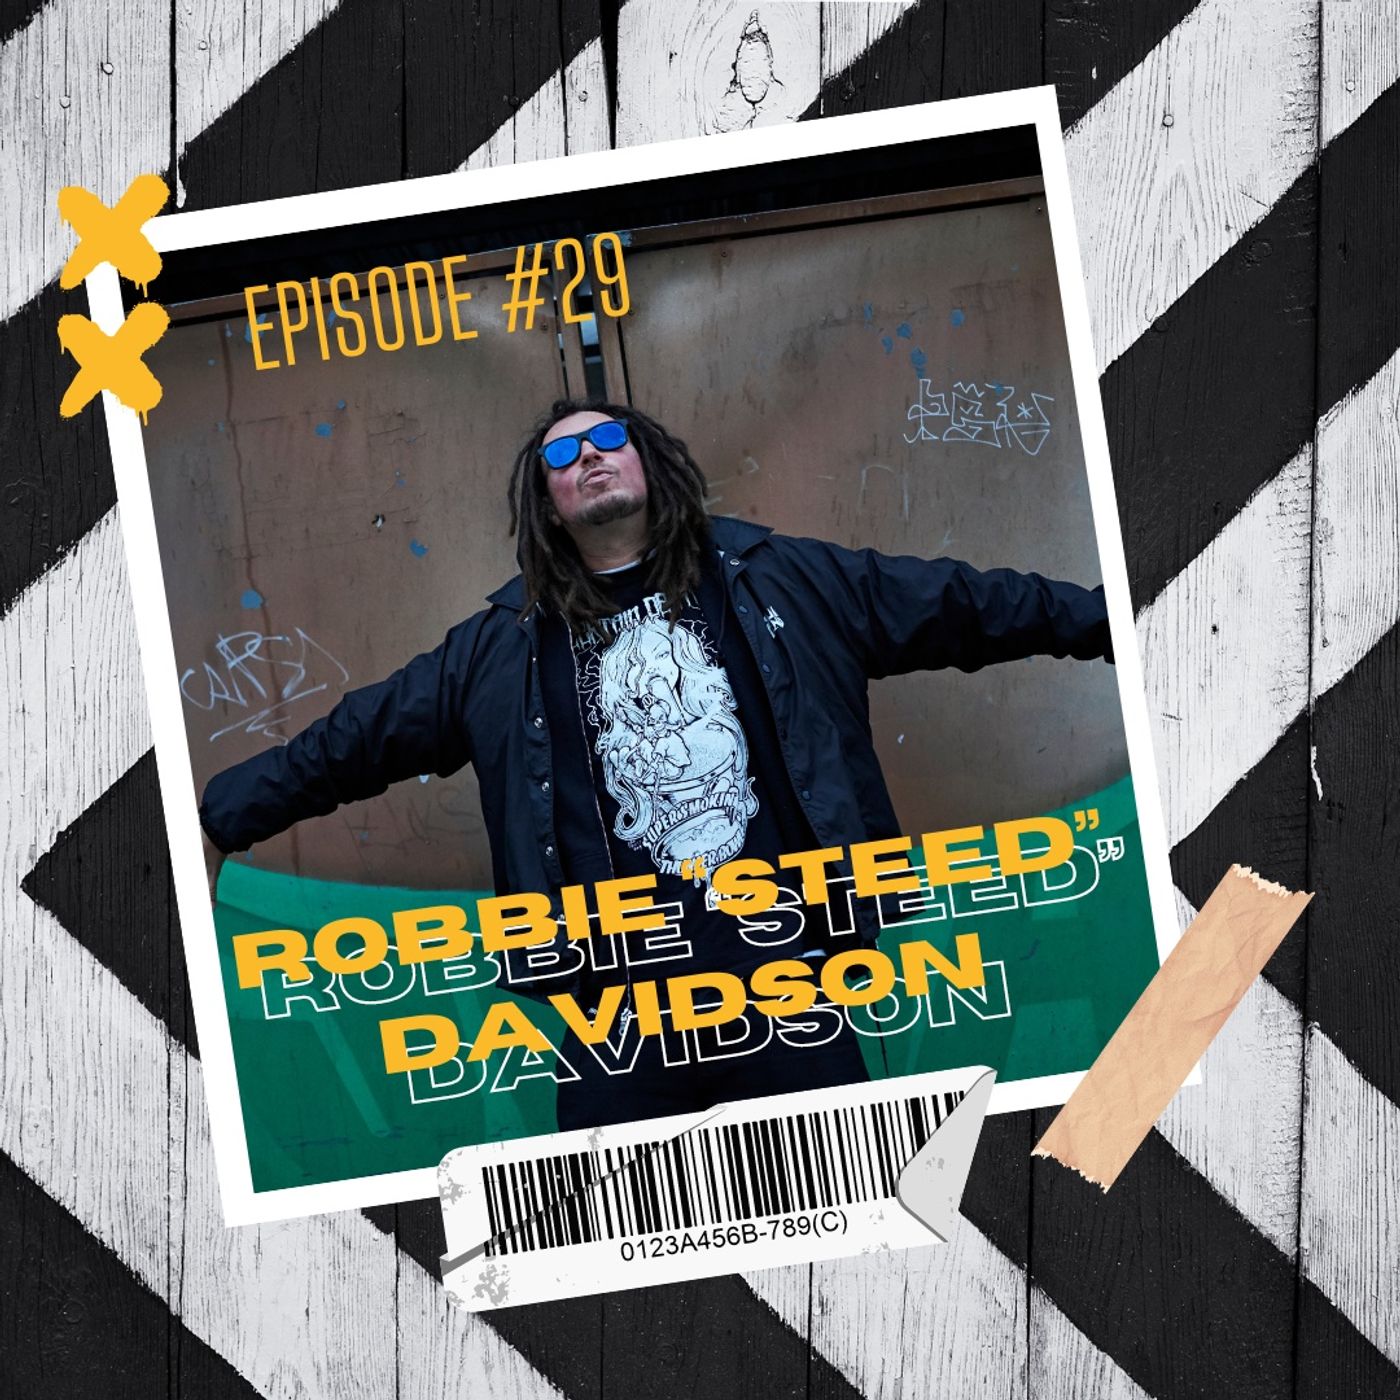 #29 - Robbie ”Steed” Davidson